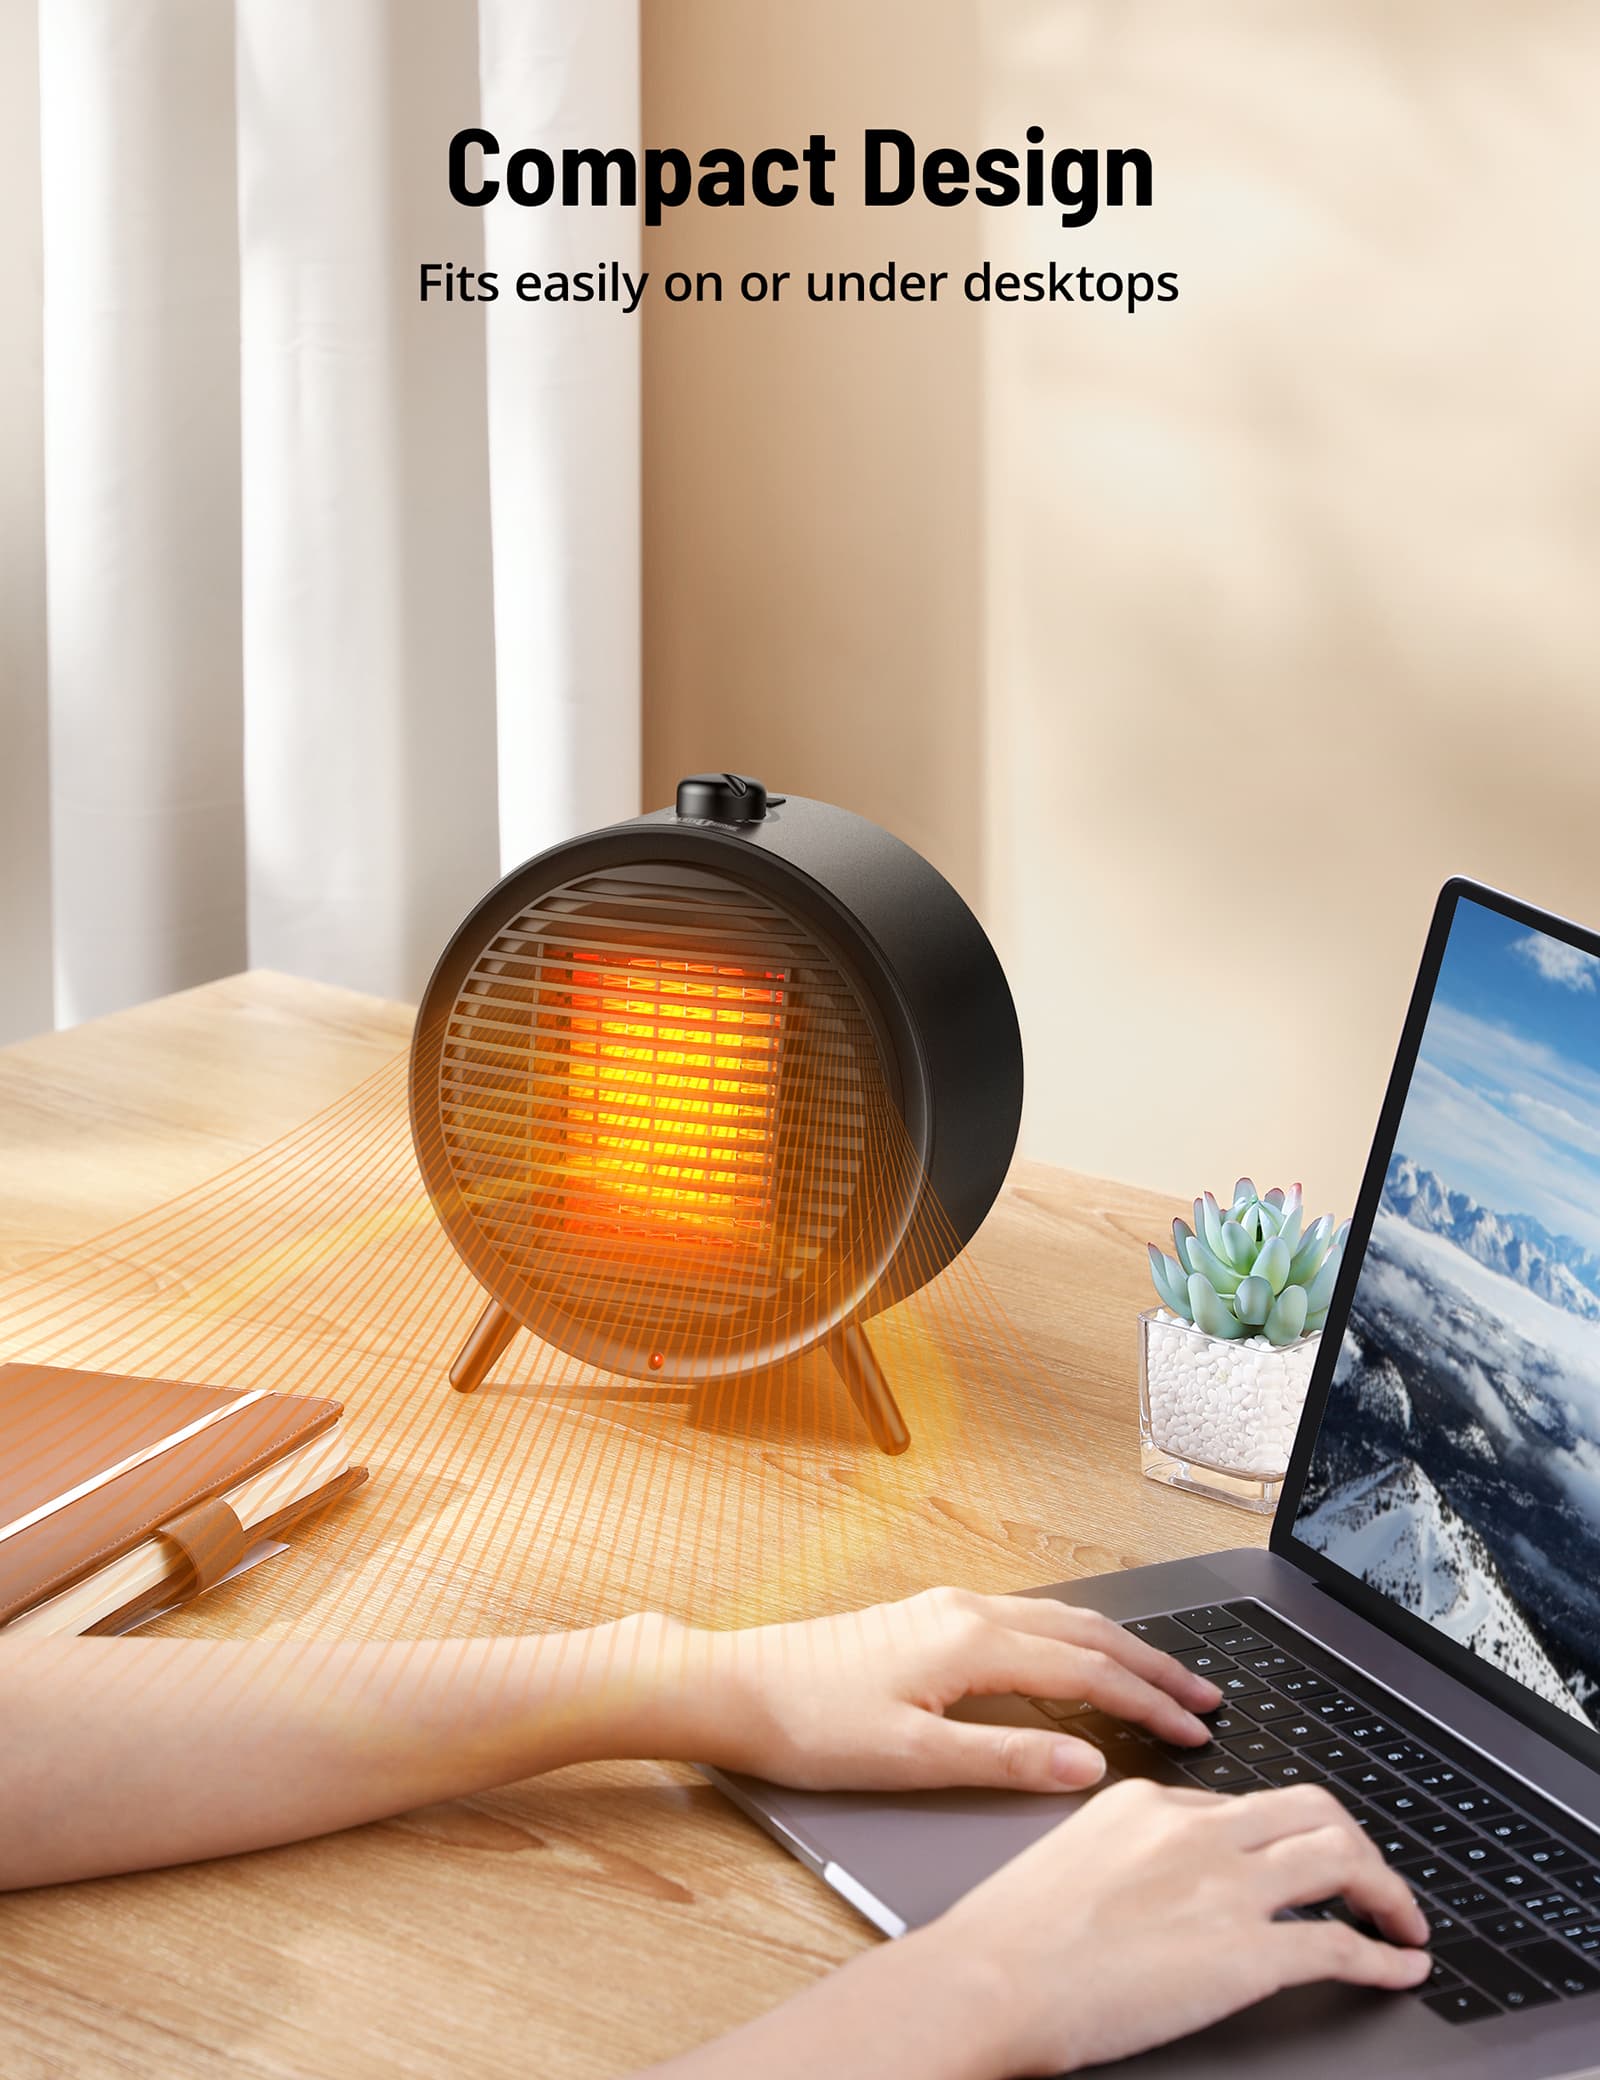 Paris Rhône Space Heater HE015, Ceramic Heater With 2 Heat Settings-Space Heaters-ParisRhone